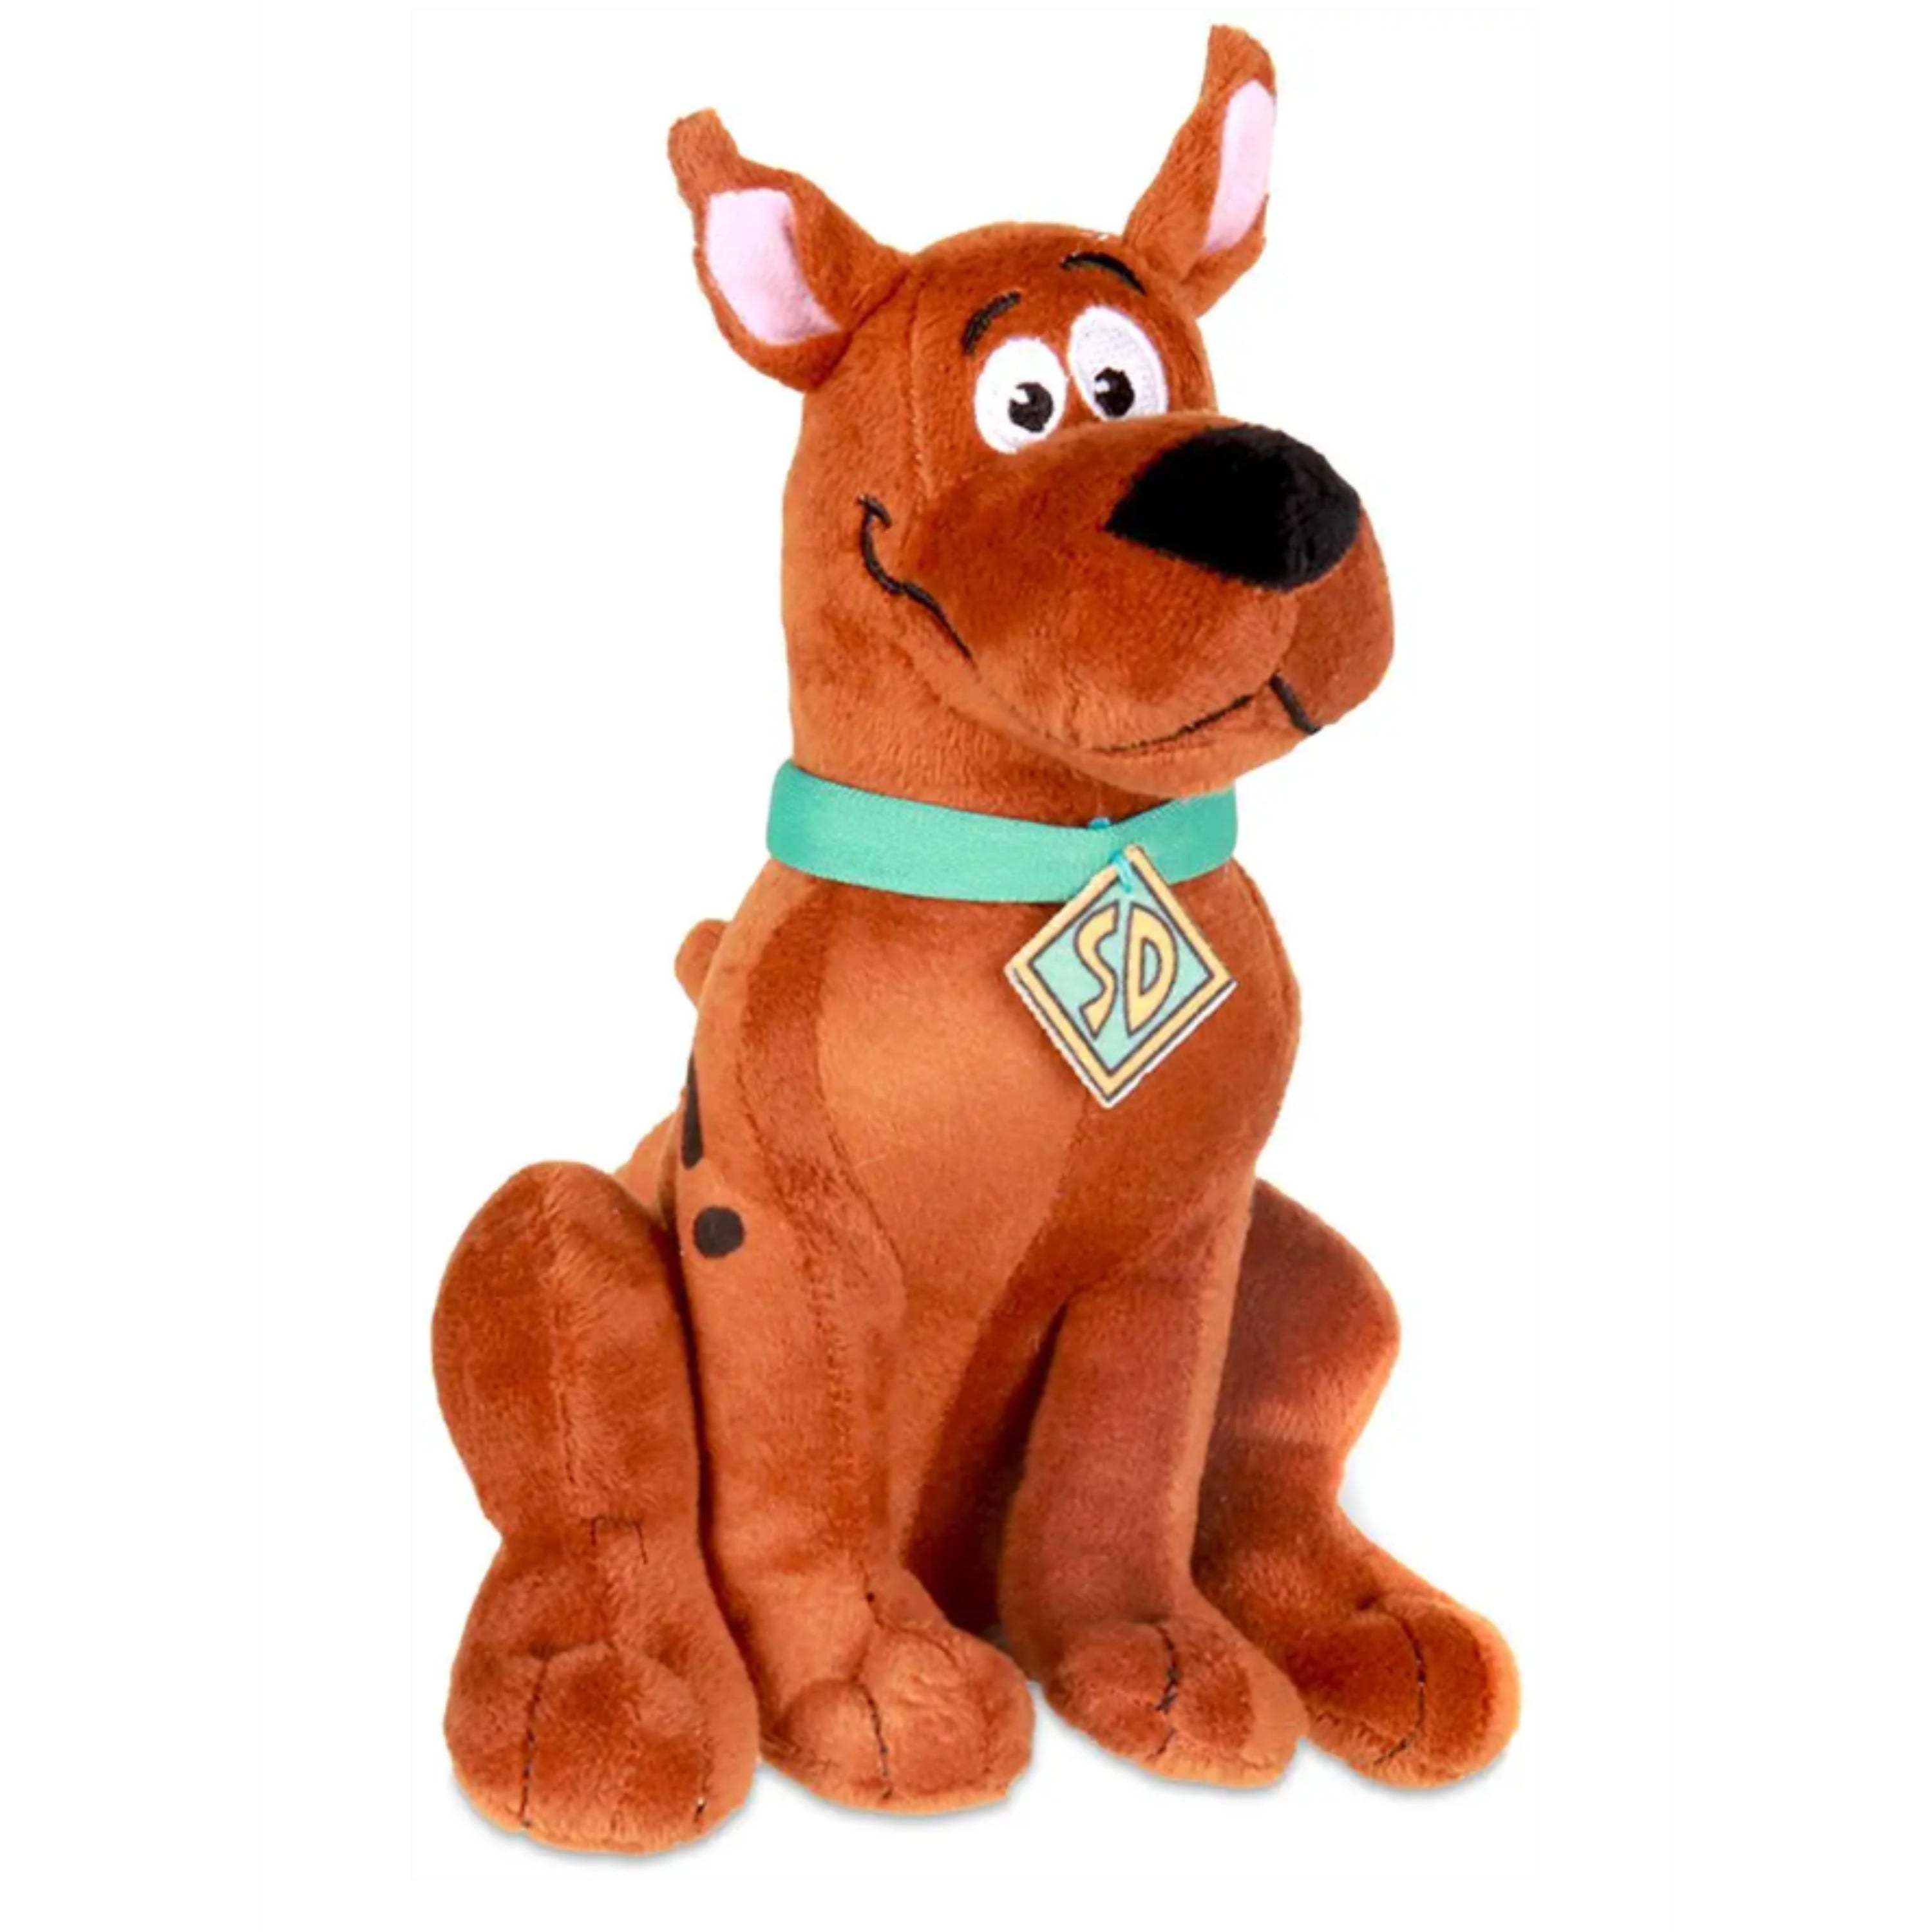 Scoob Scooby Doo Plush Stuffed Toy – 6"